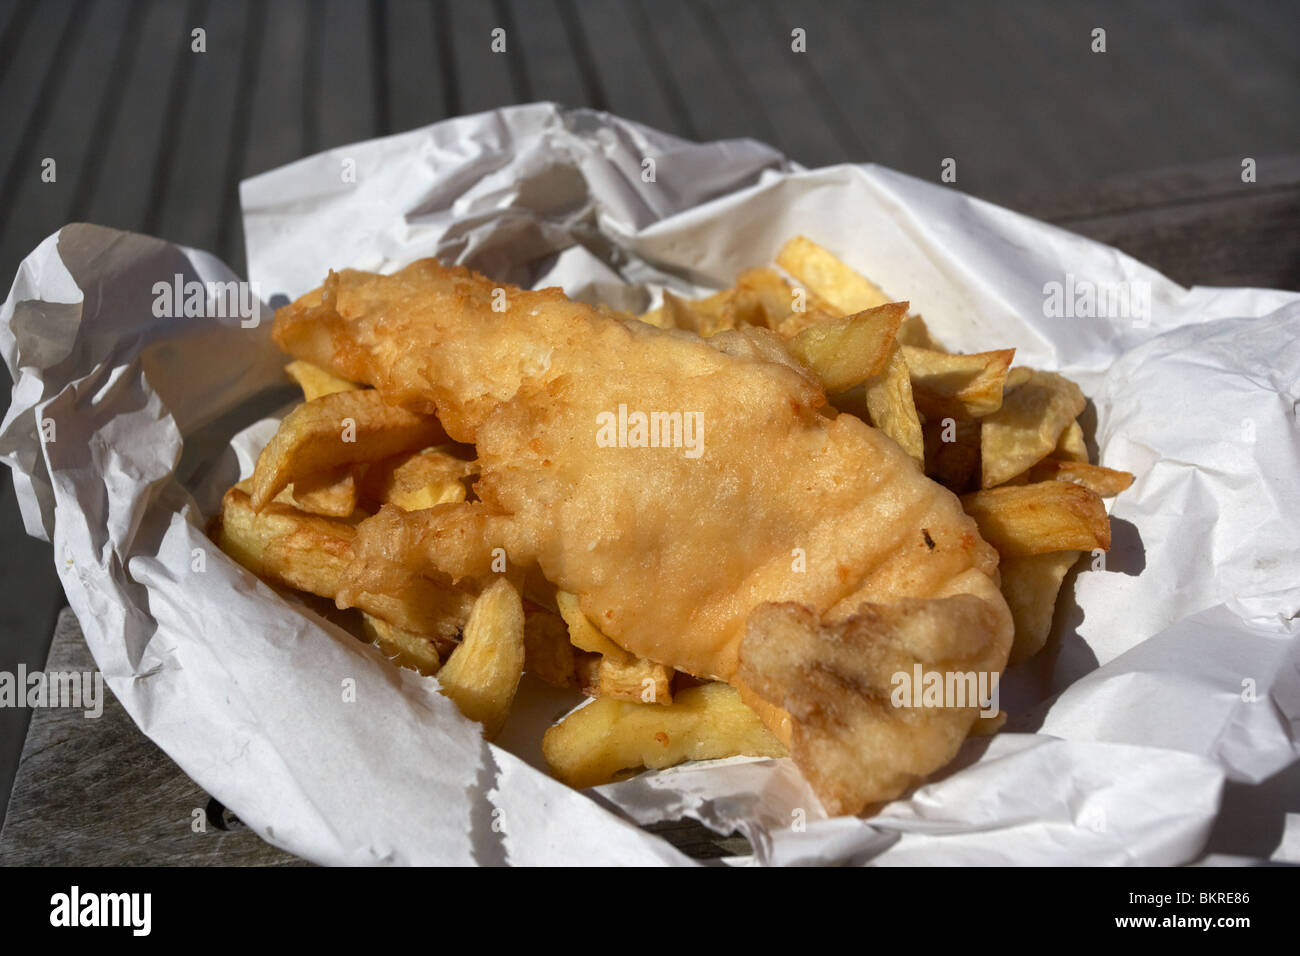 20kg 22" x 20" Chip Shop PAPER Cafe Takeaway Restaurant Fish Chips 